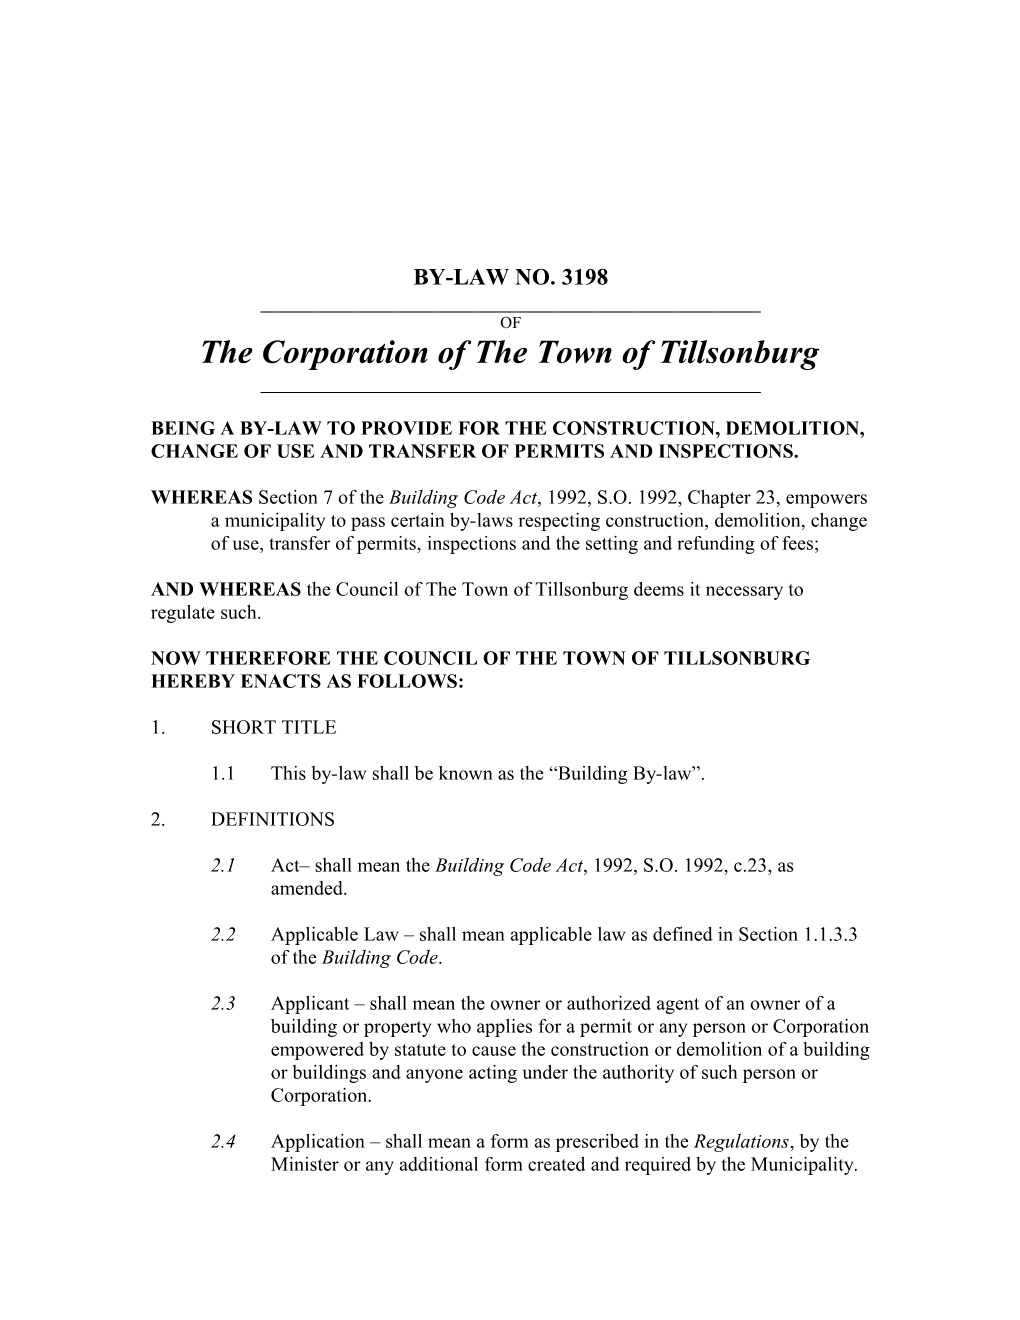 The Corporation of the Town of Tillsonburg